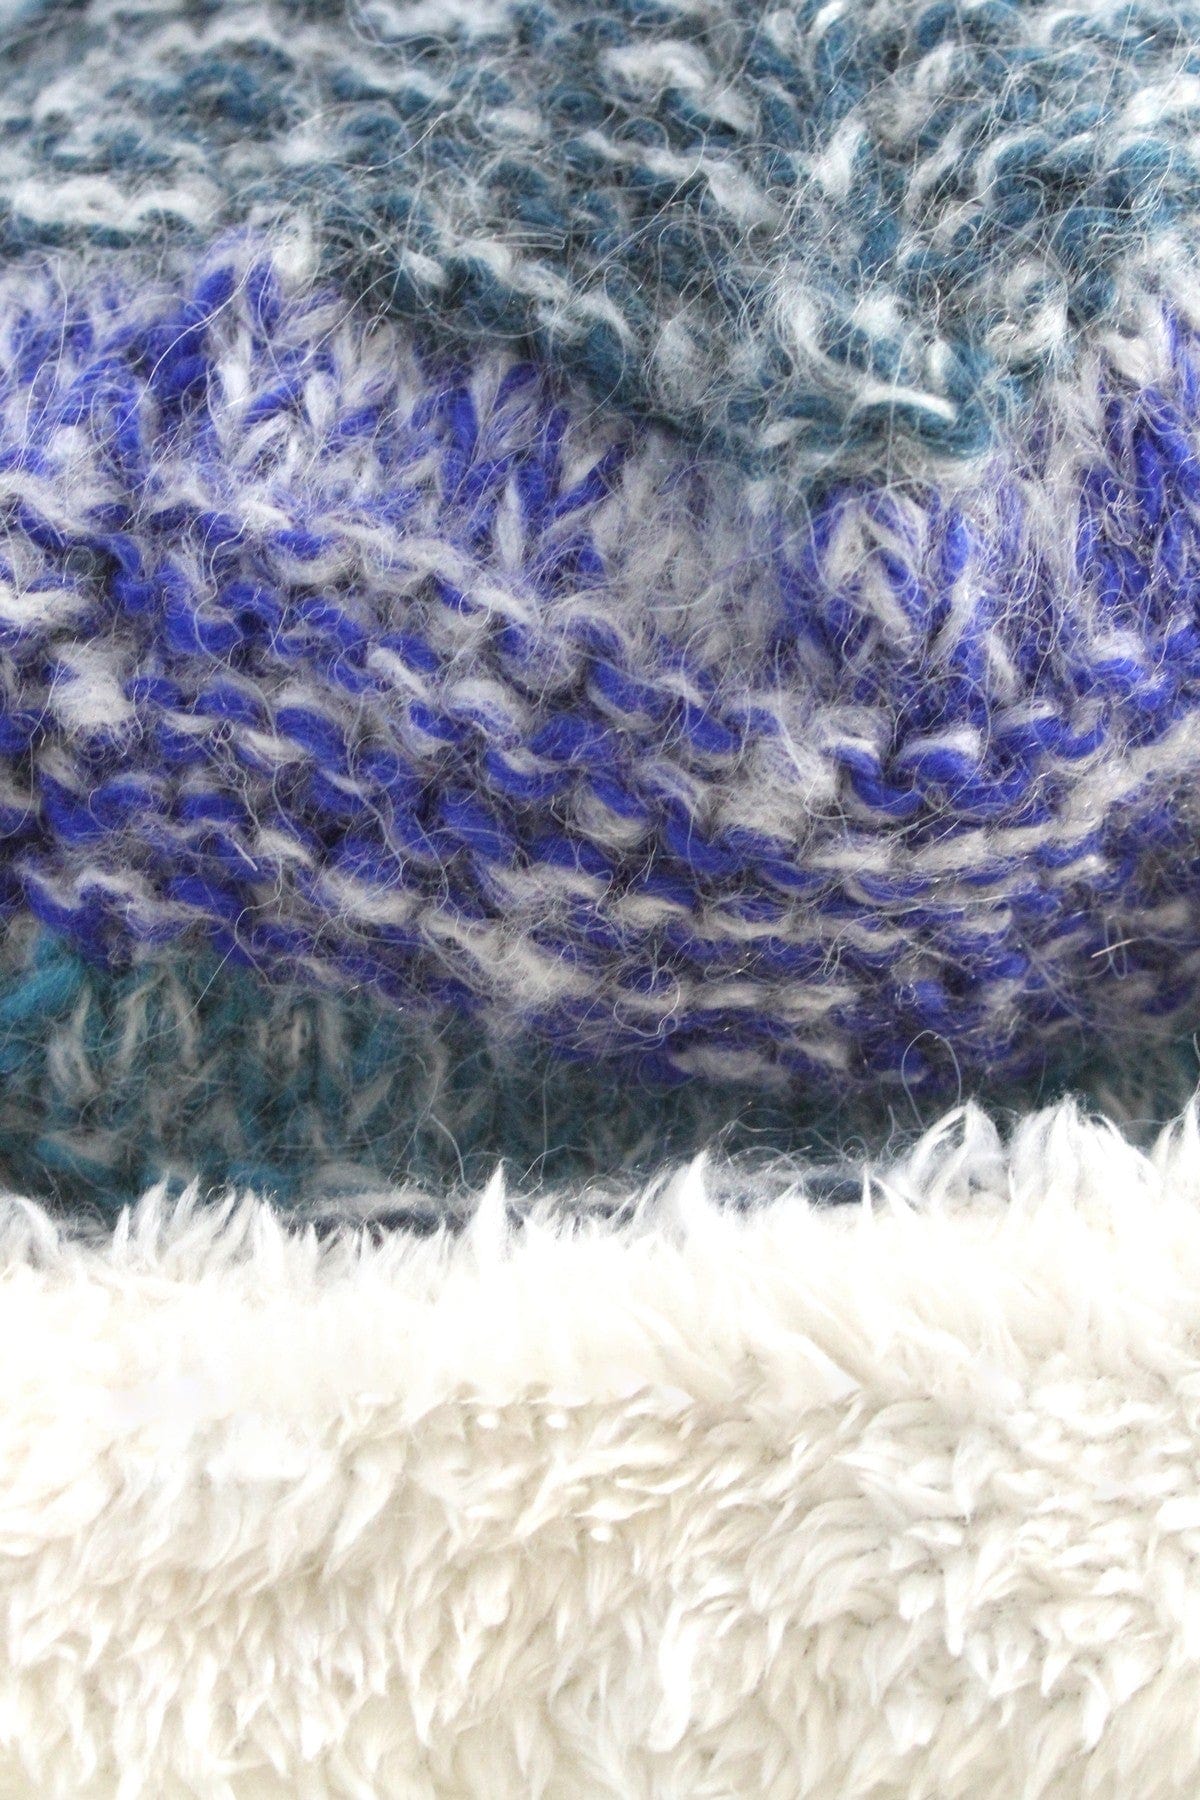 lusciousscarves wool head band Pachamama Sierra Nevada Headband Blue